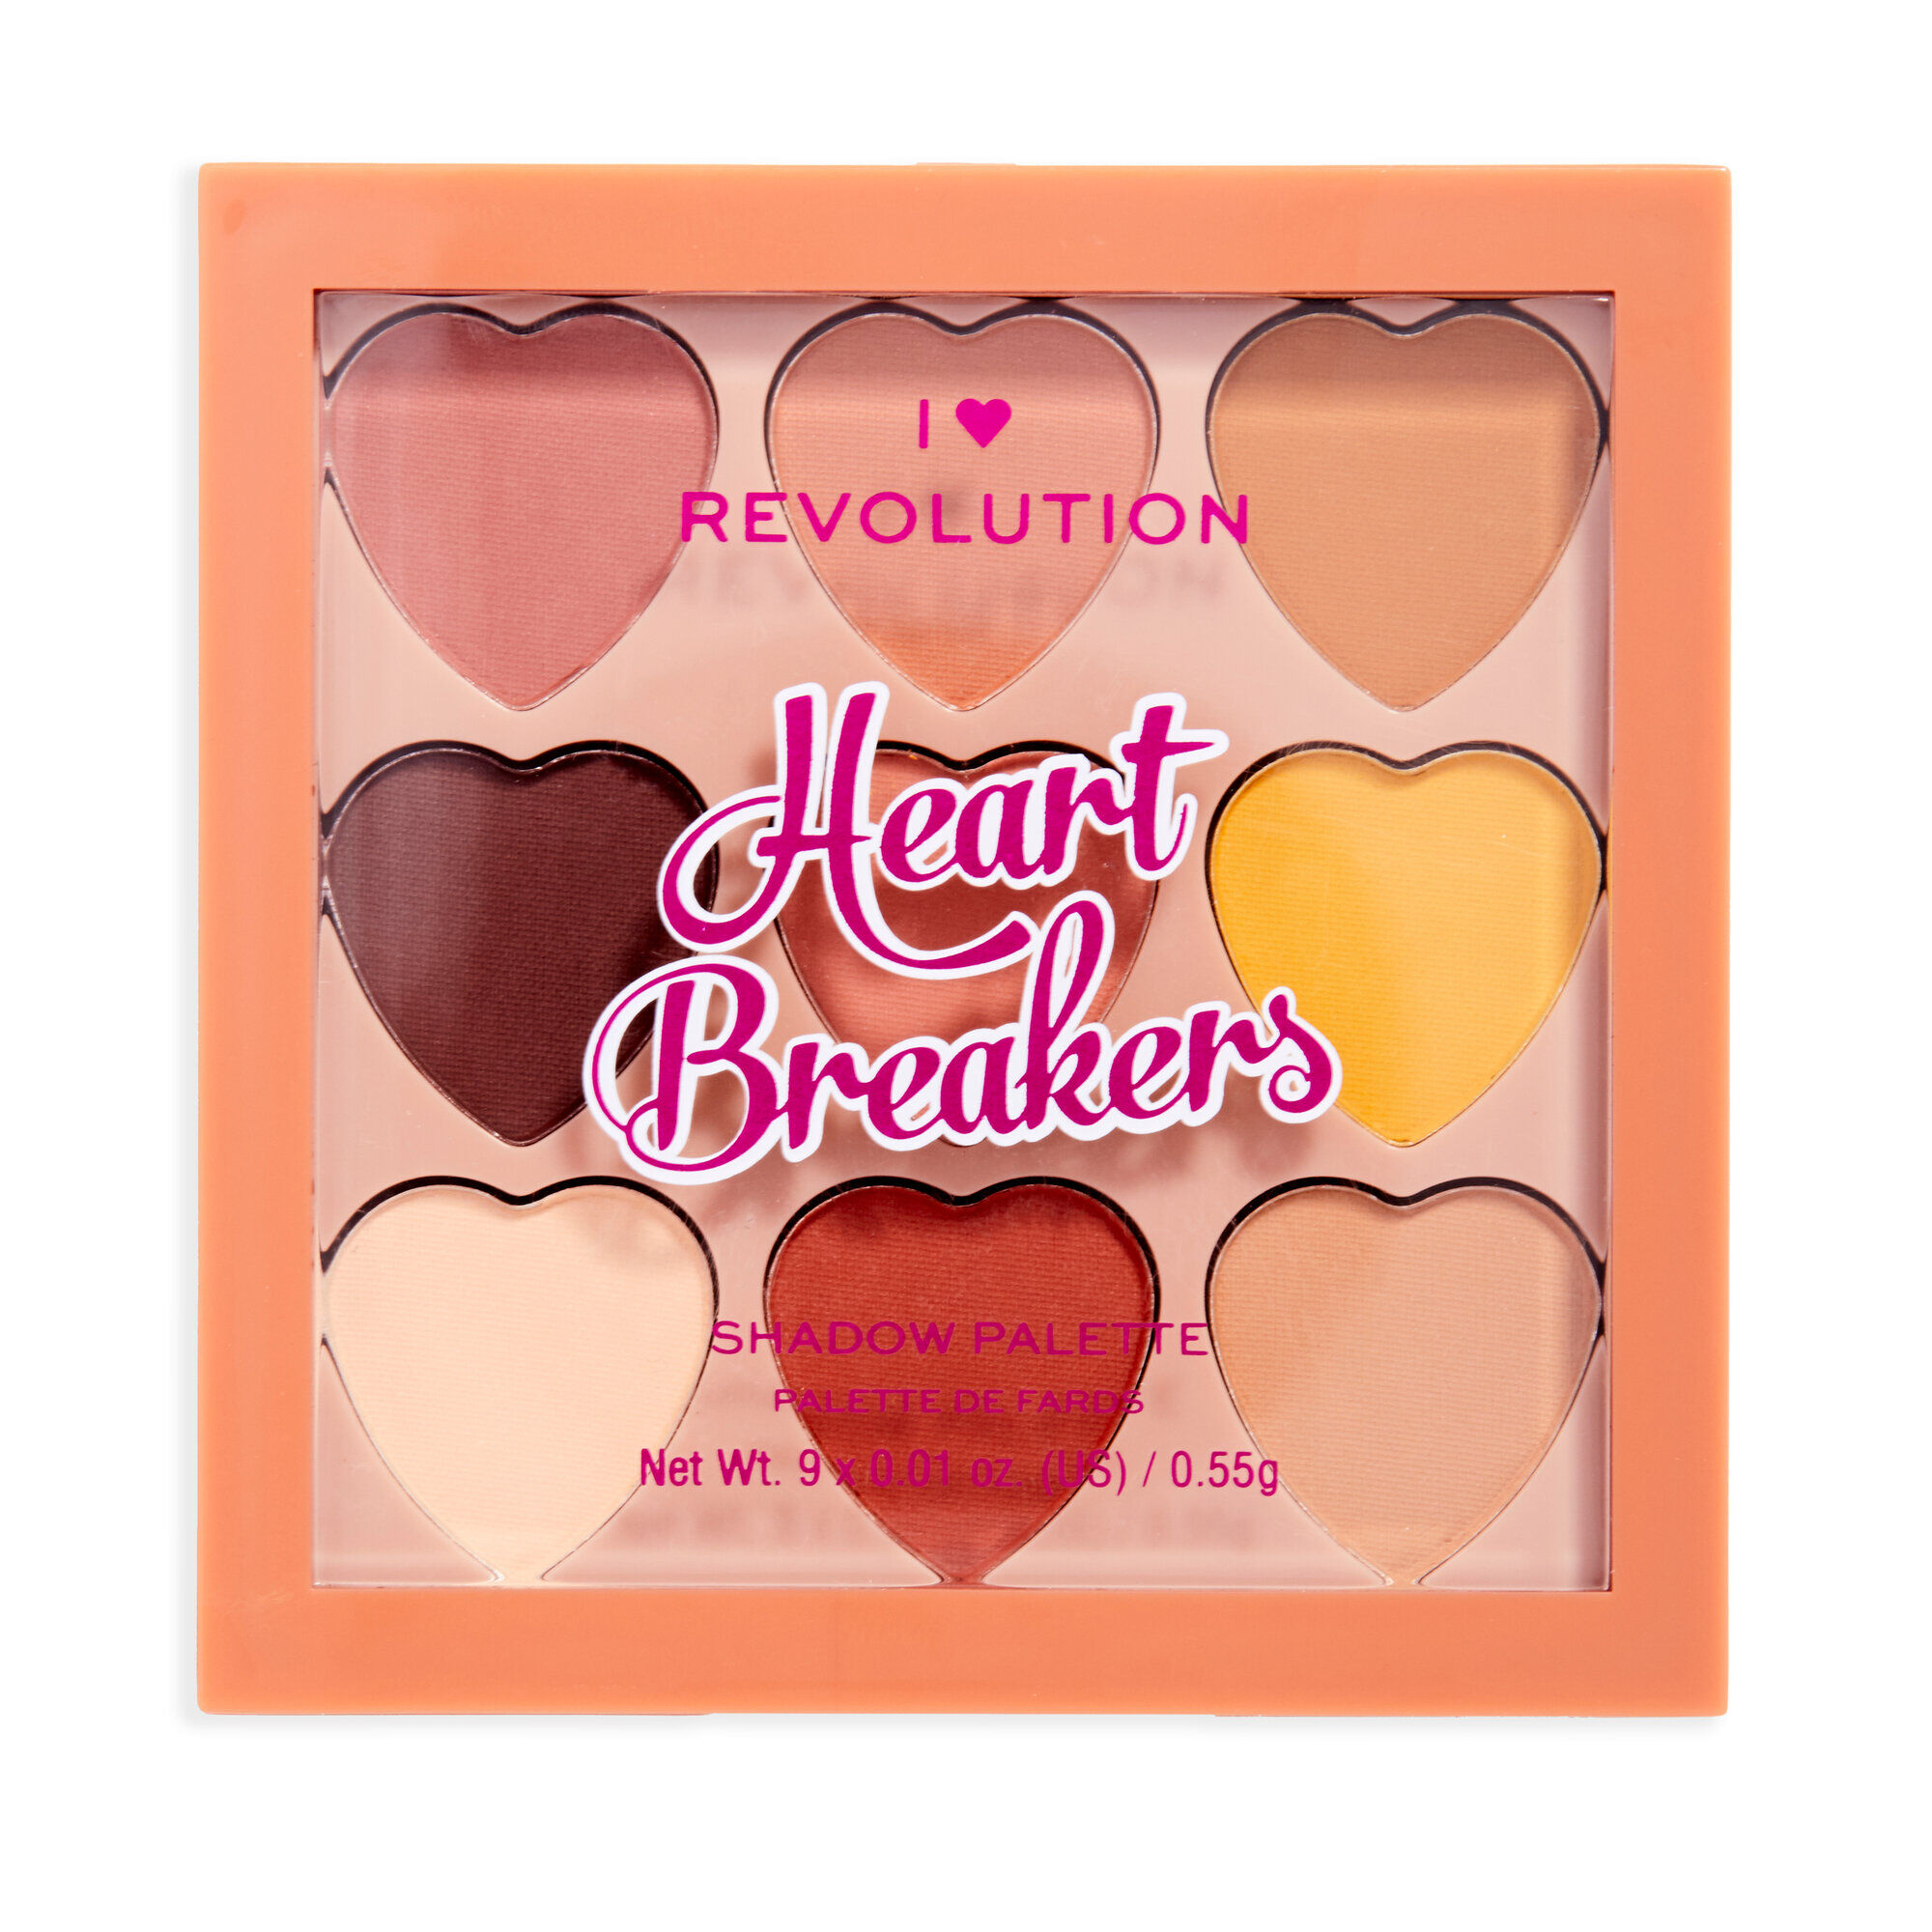 Палетка теней I Heart Revolution, Heart Breakers Plush палетка теней для век i heart revolution mini chocolate cherry 8 ов 10 2 г